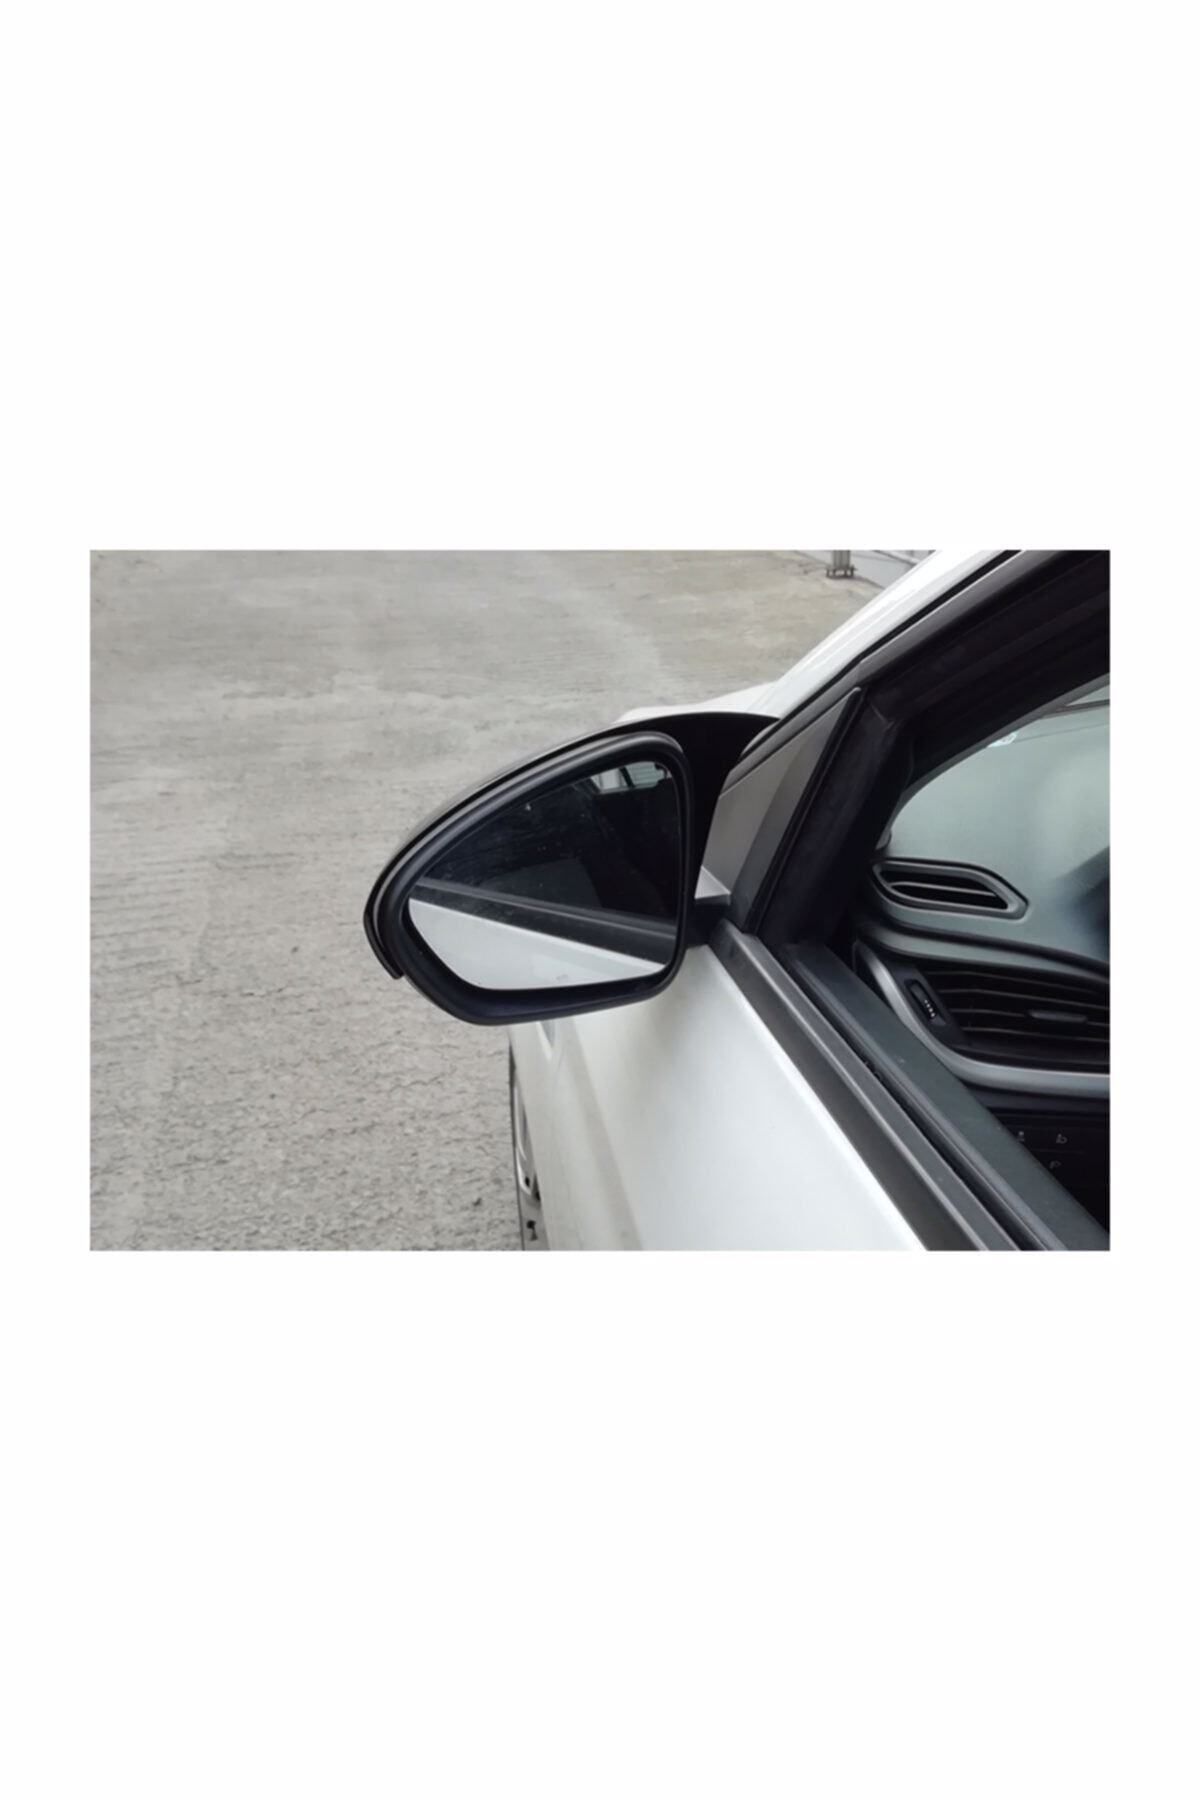 EzBer Aksesuar Fiat Egea Yarasa Ayna Kapağı Piano Black Batman 2015 Sonrası Sedan Hb